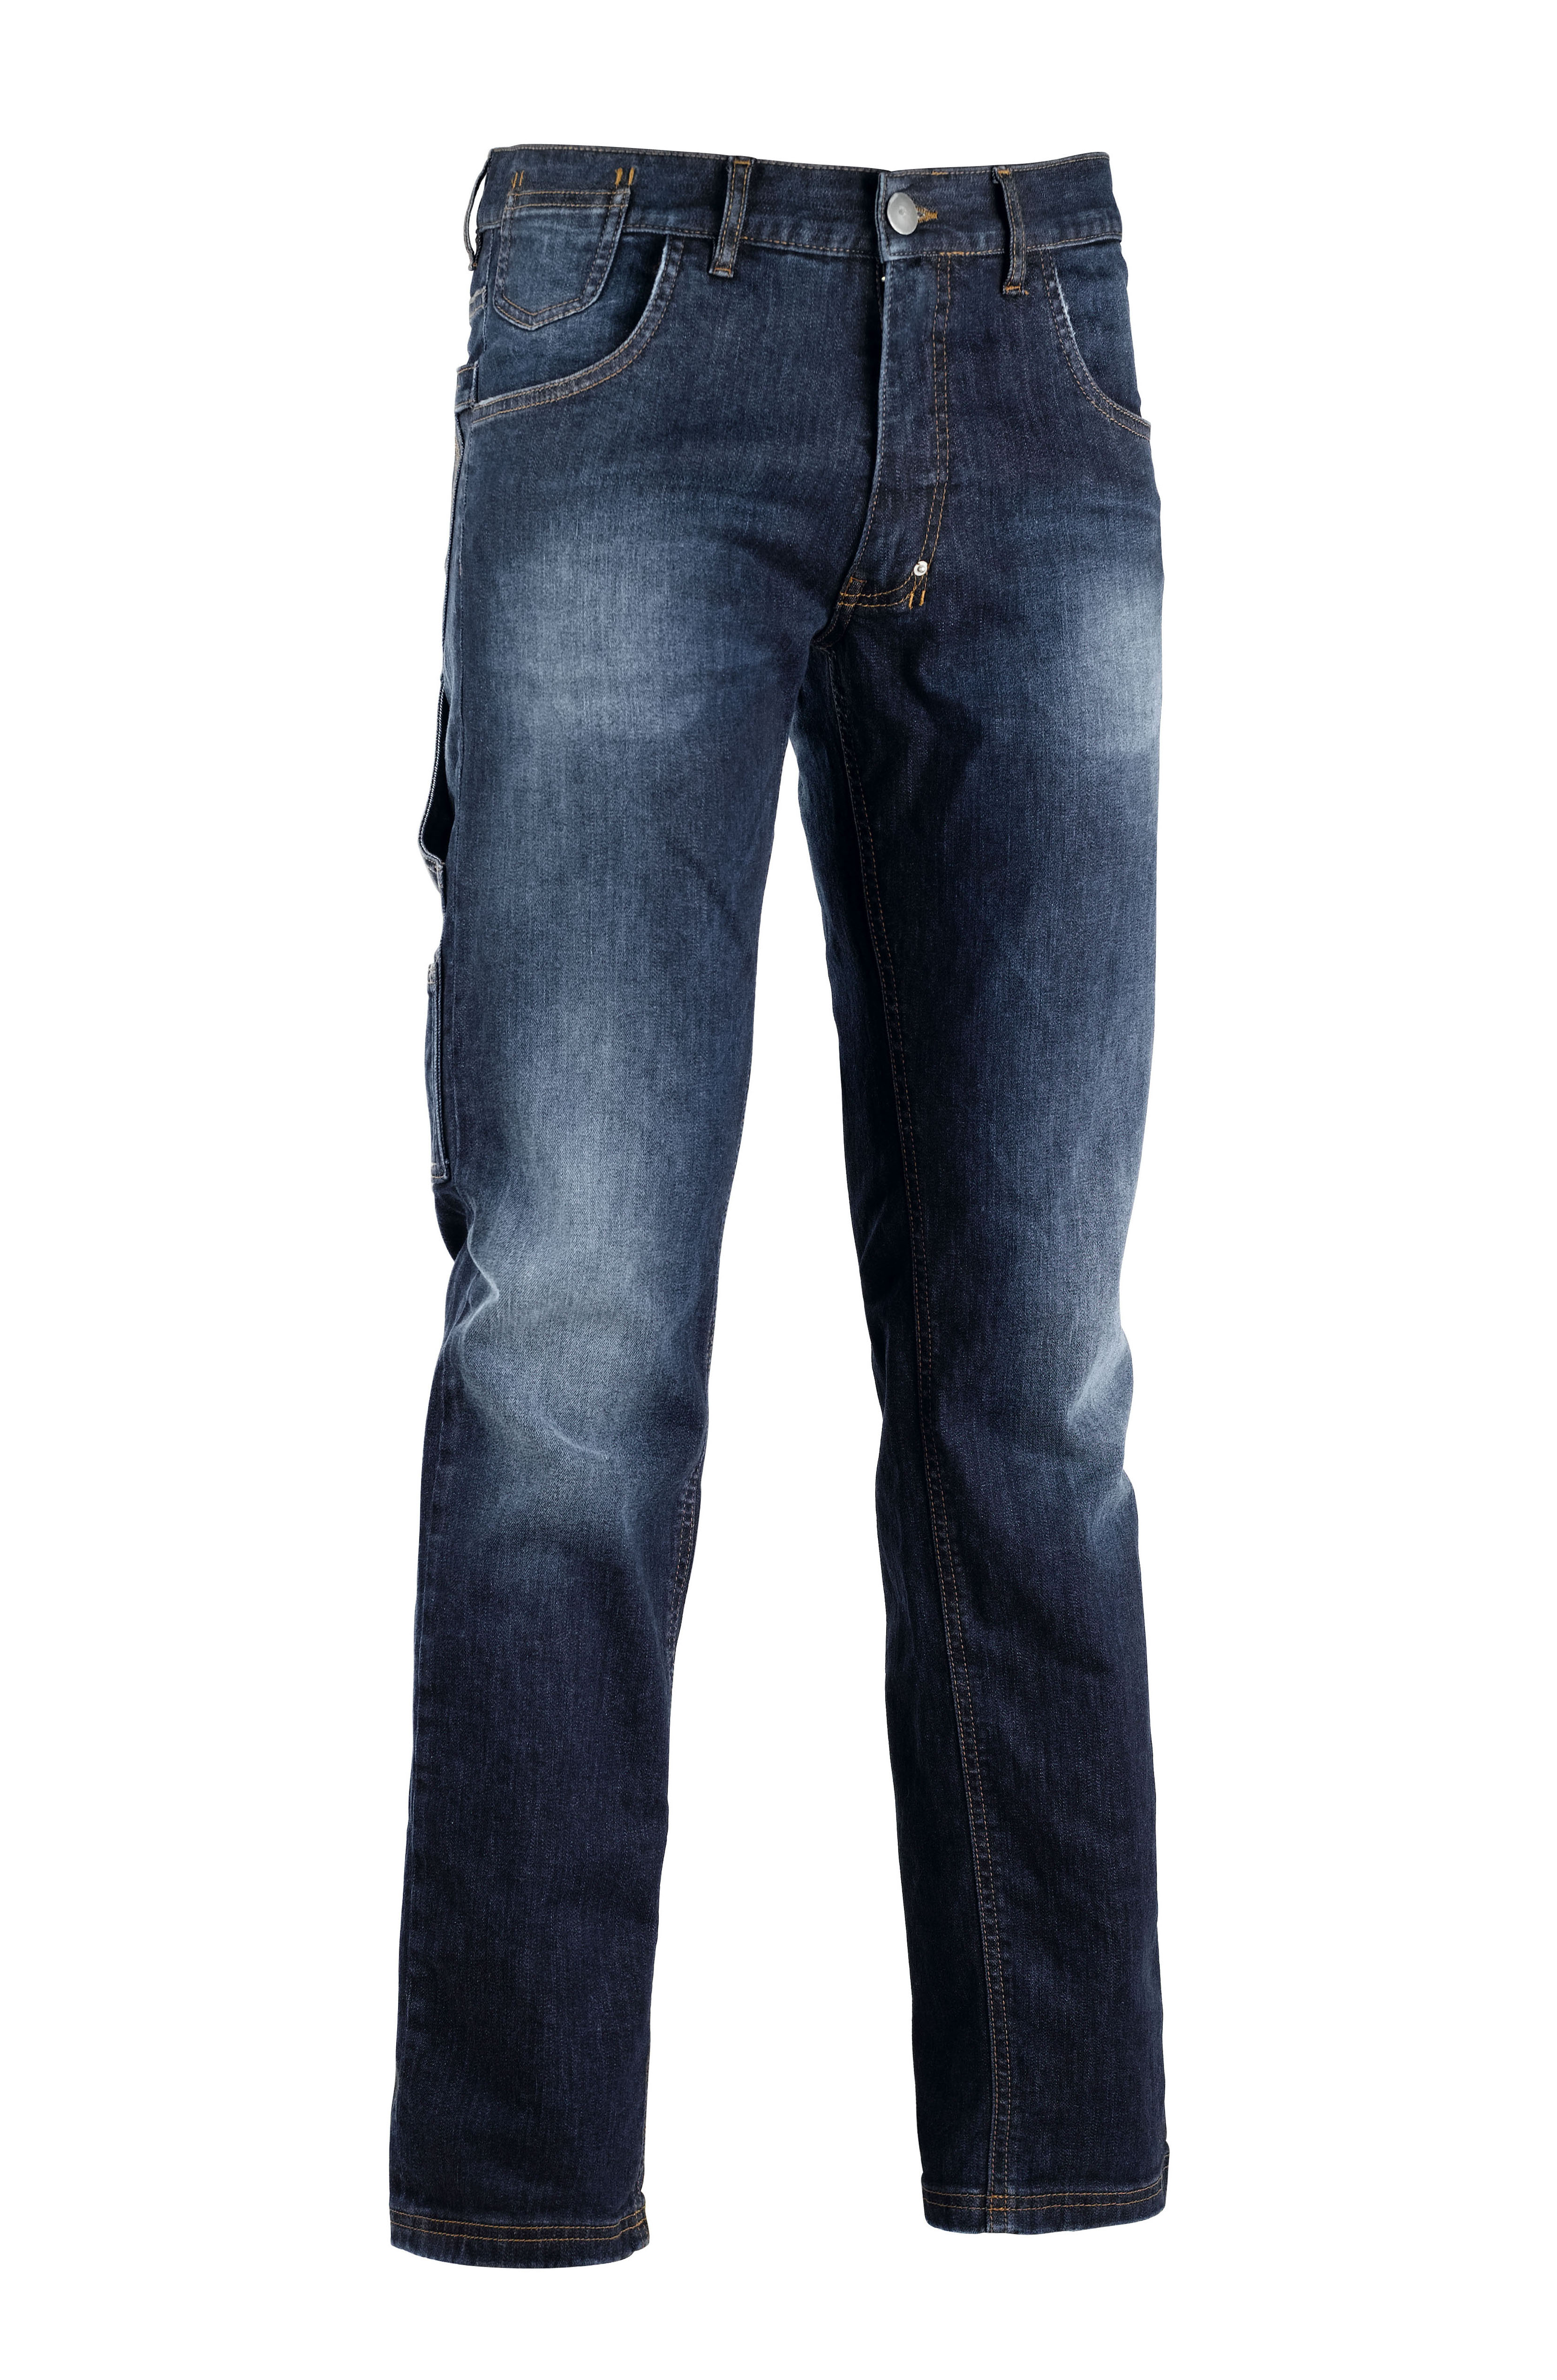 Pantalone stone blu jeans lavato tg m